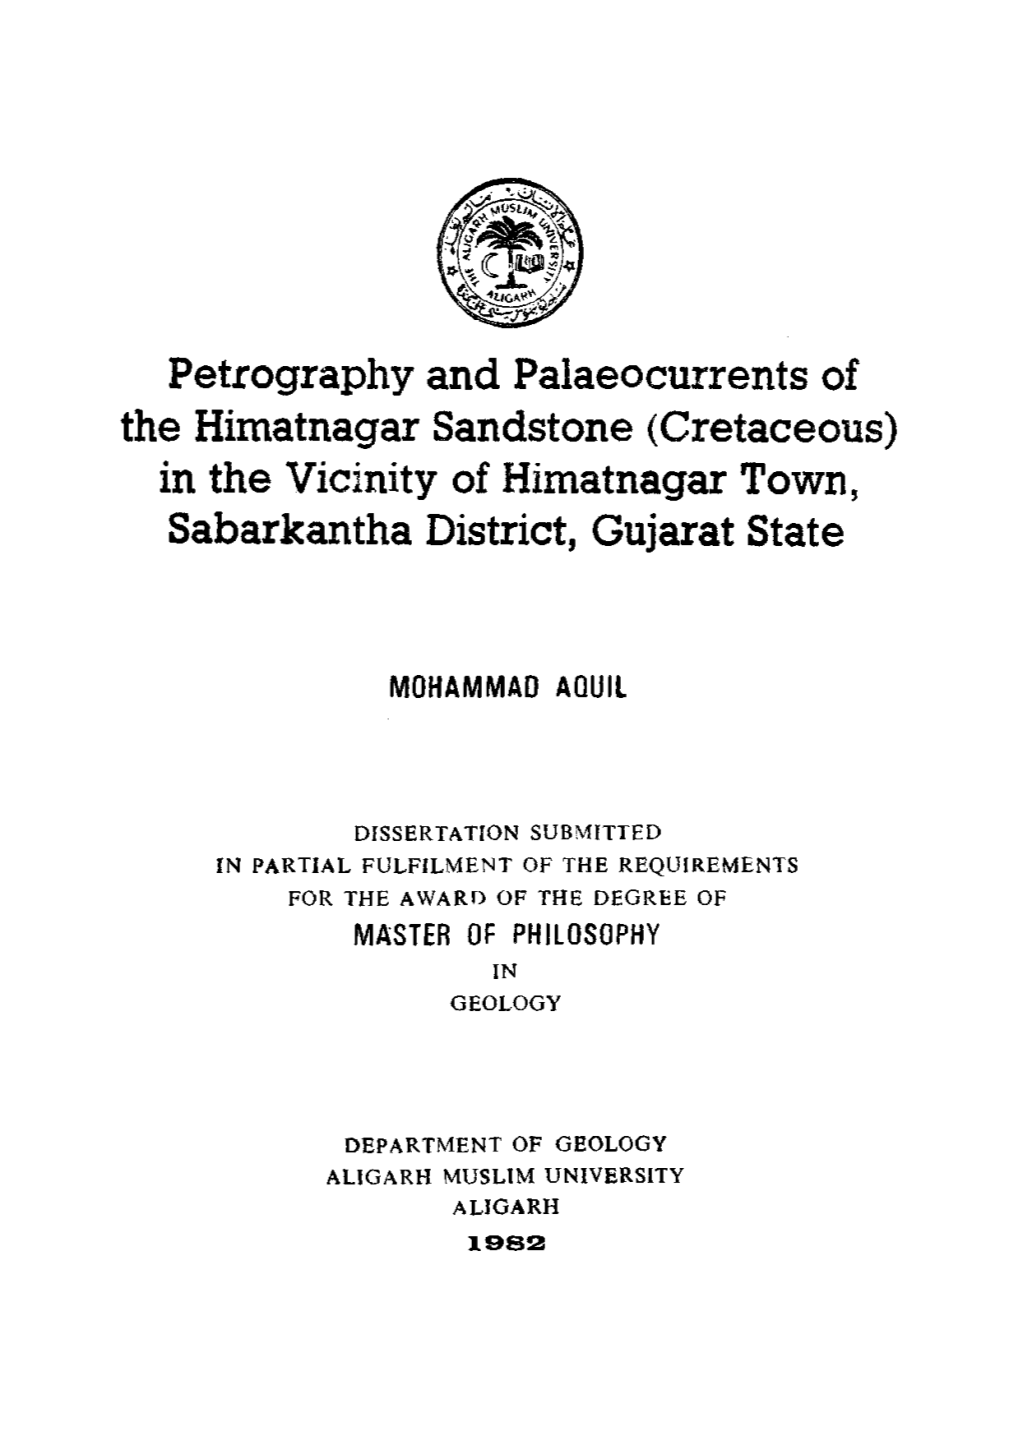 Petrography and Palaeocurrents of the Himatnagar Sandstone (Cretaceous) in the Vicinity of Himatnagar Town, Sabarkantha District, Gujarat State